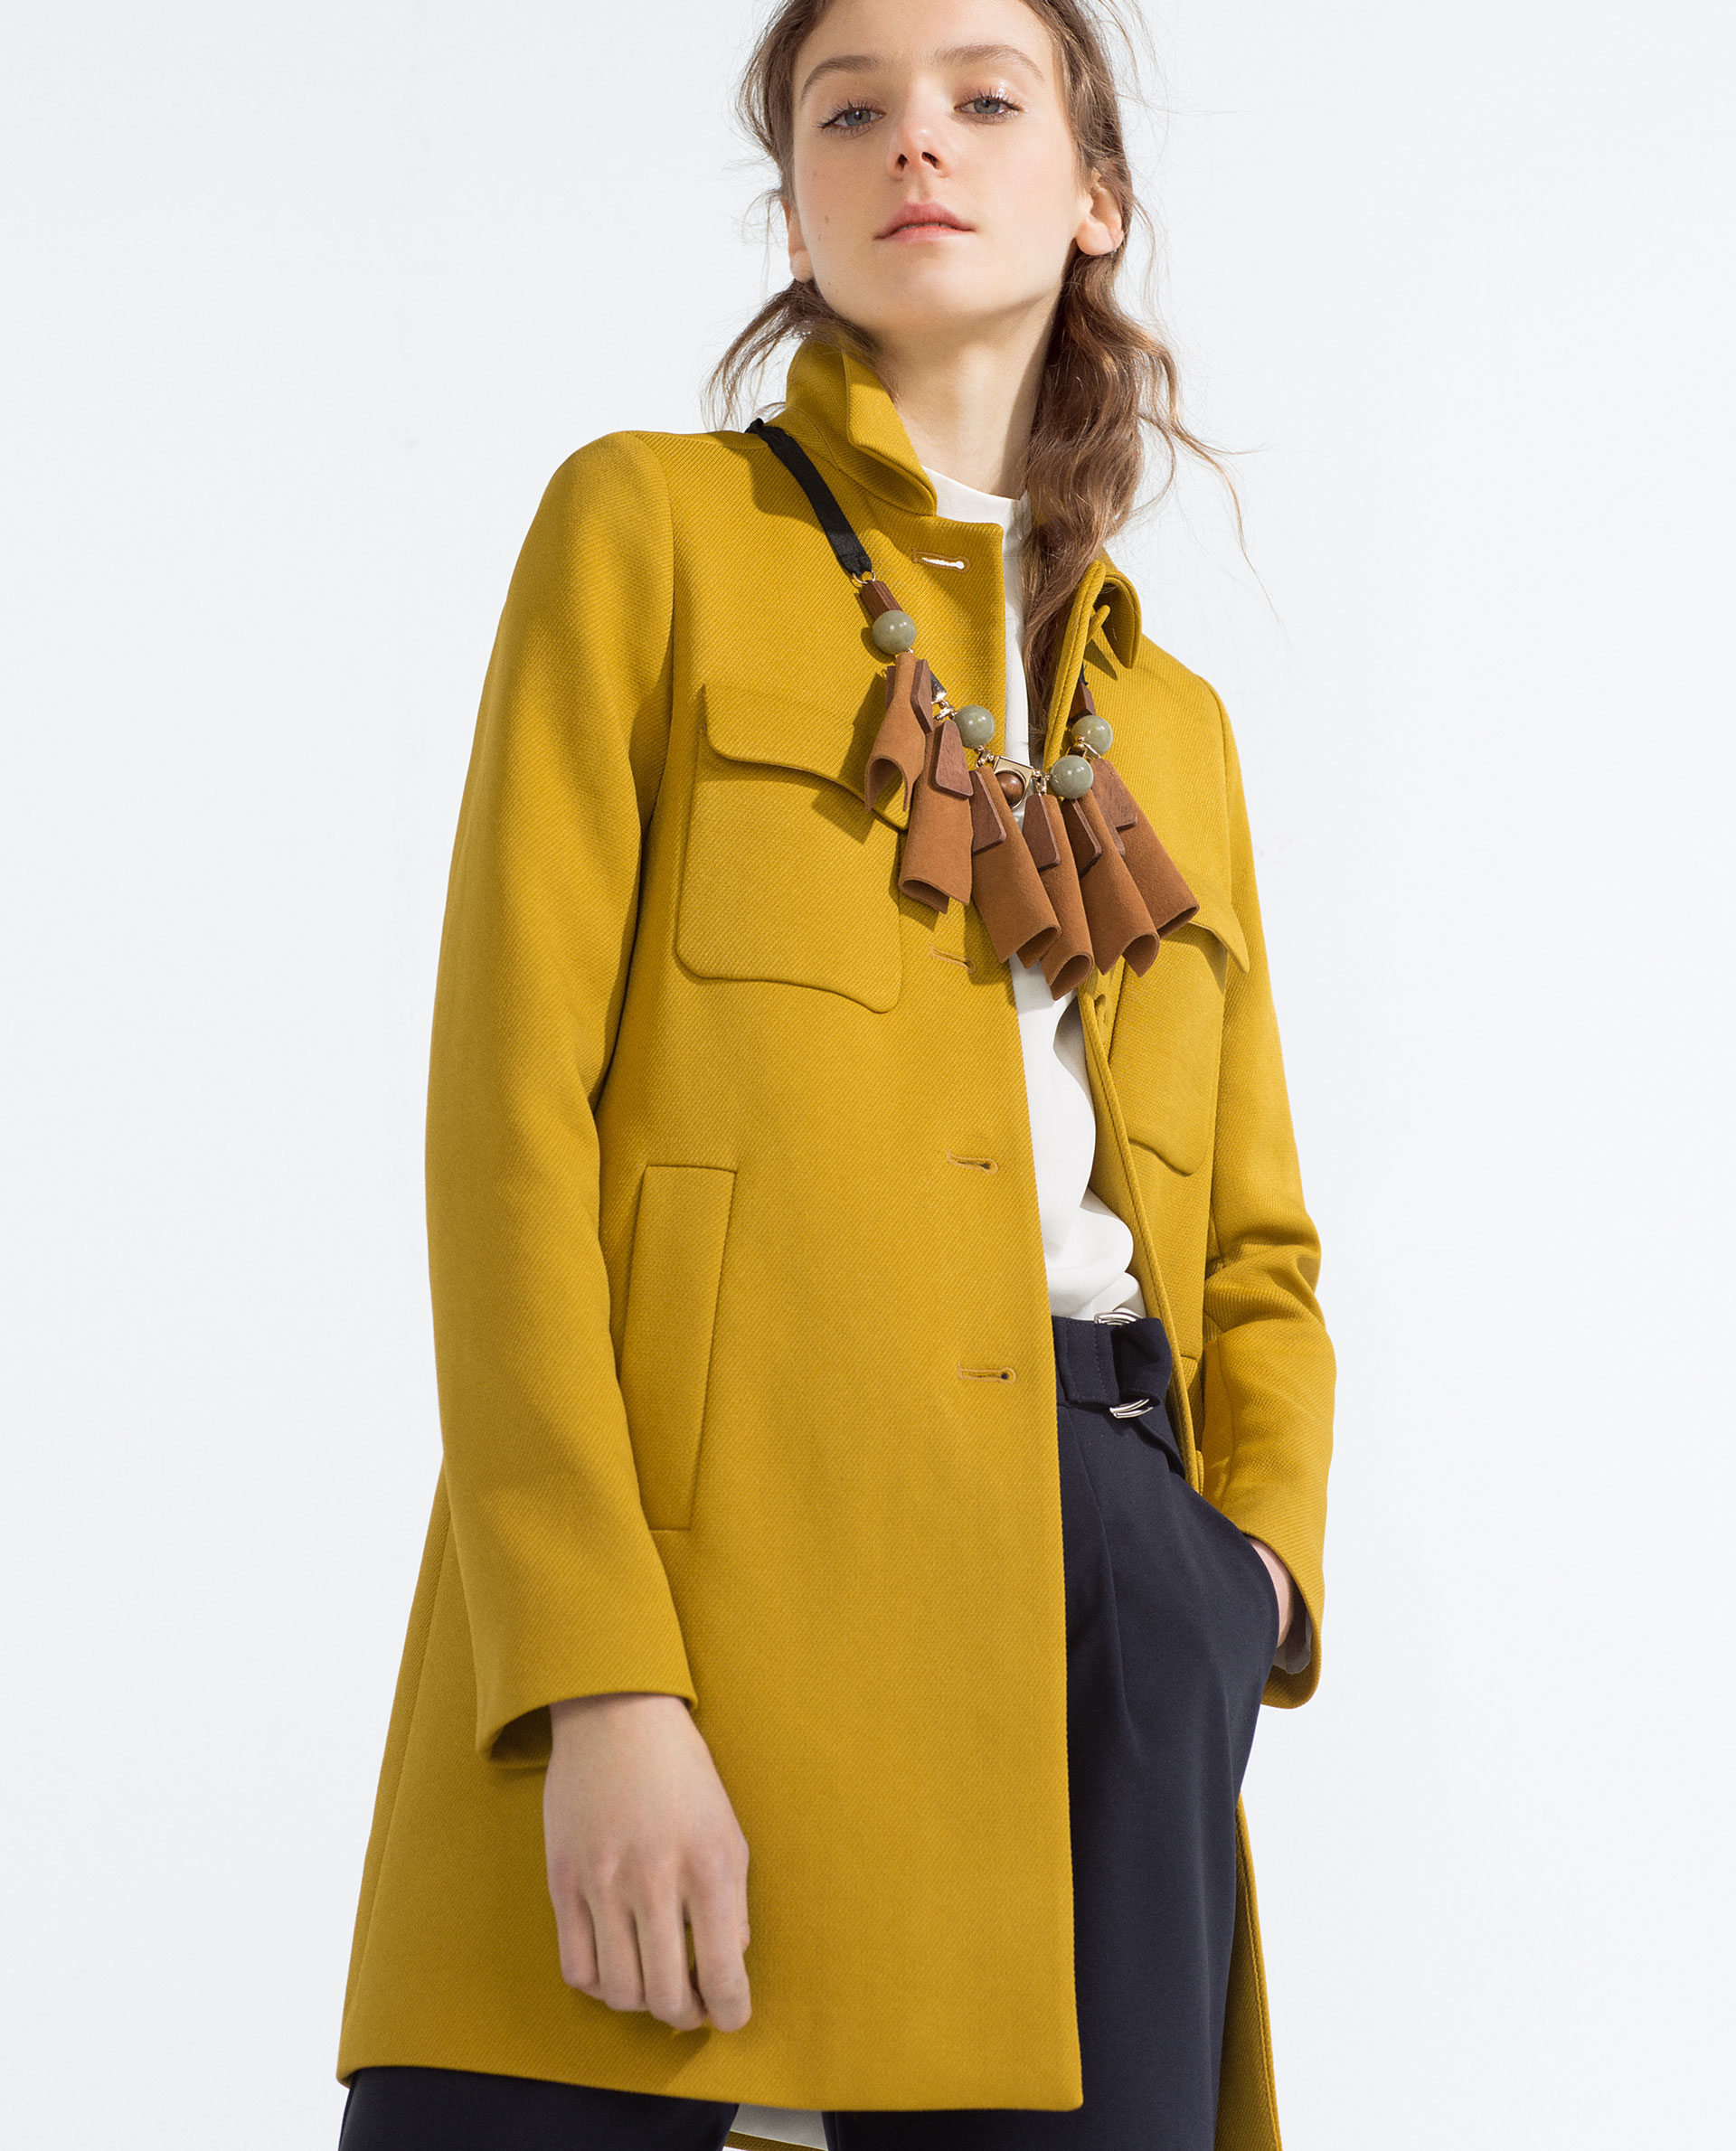 Zara Coat With Peter Pan Collar in Yellow | Lyst